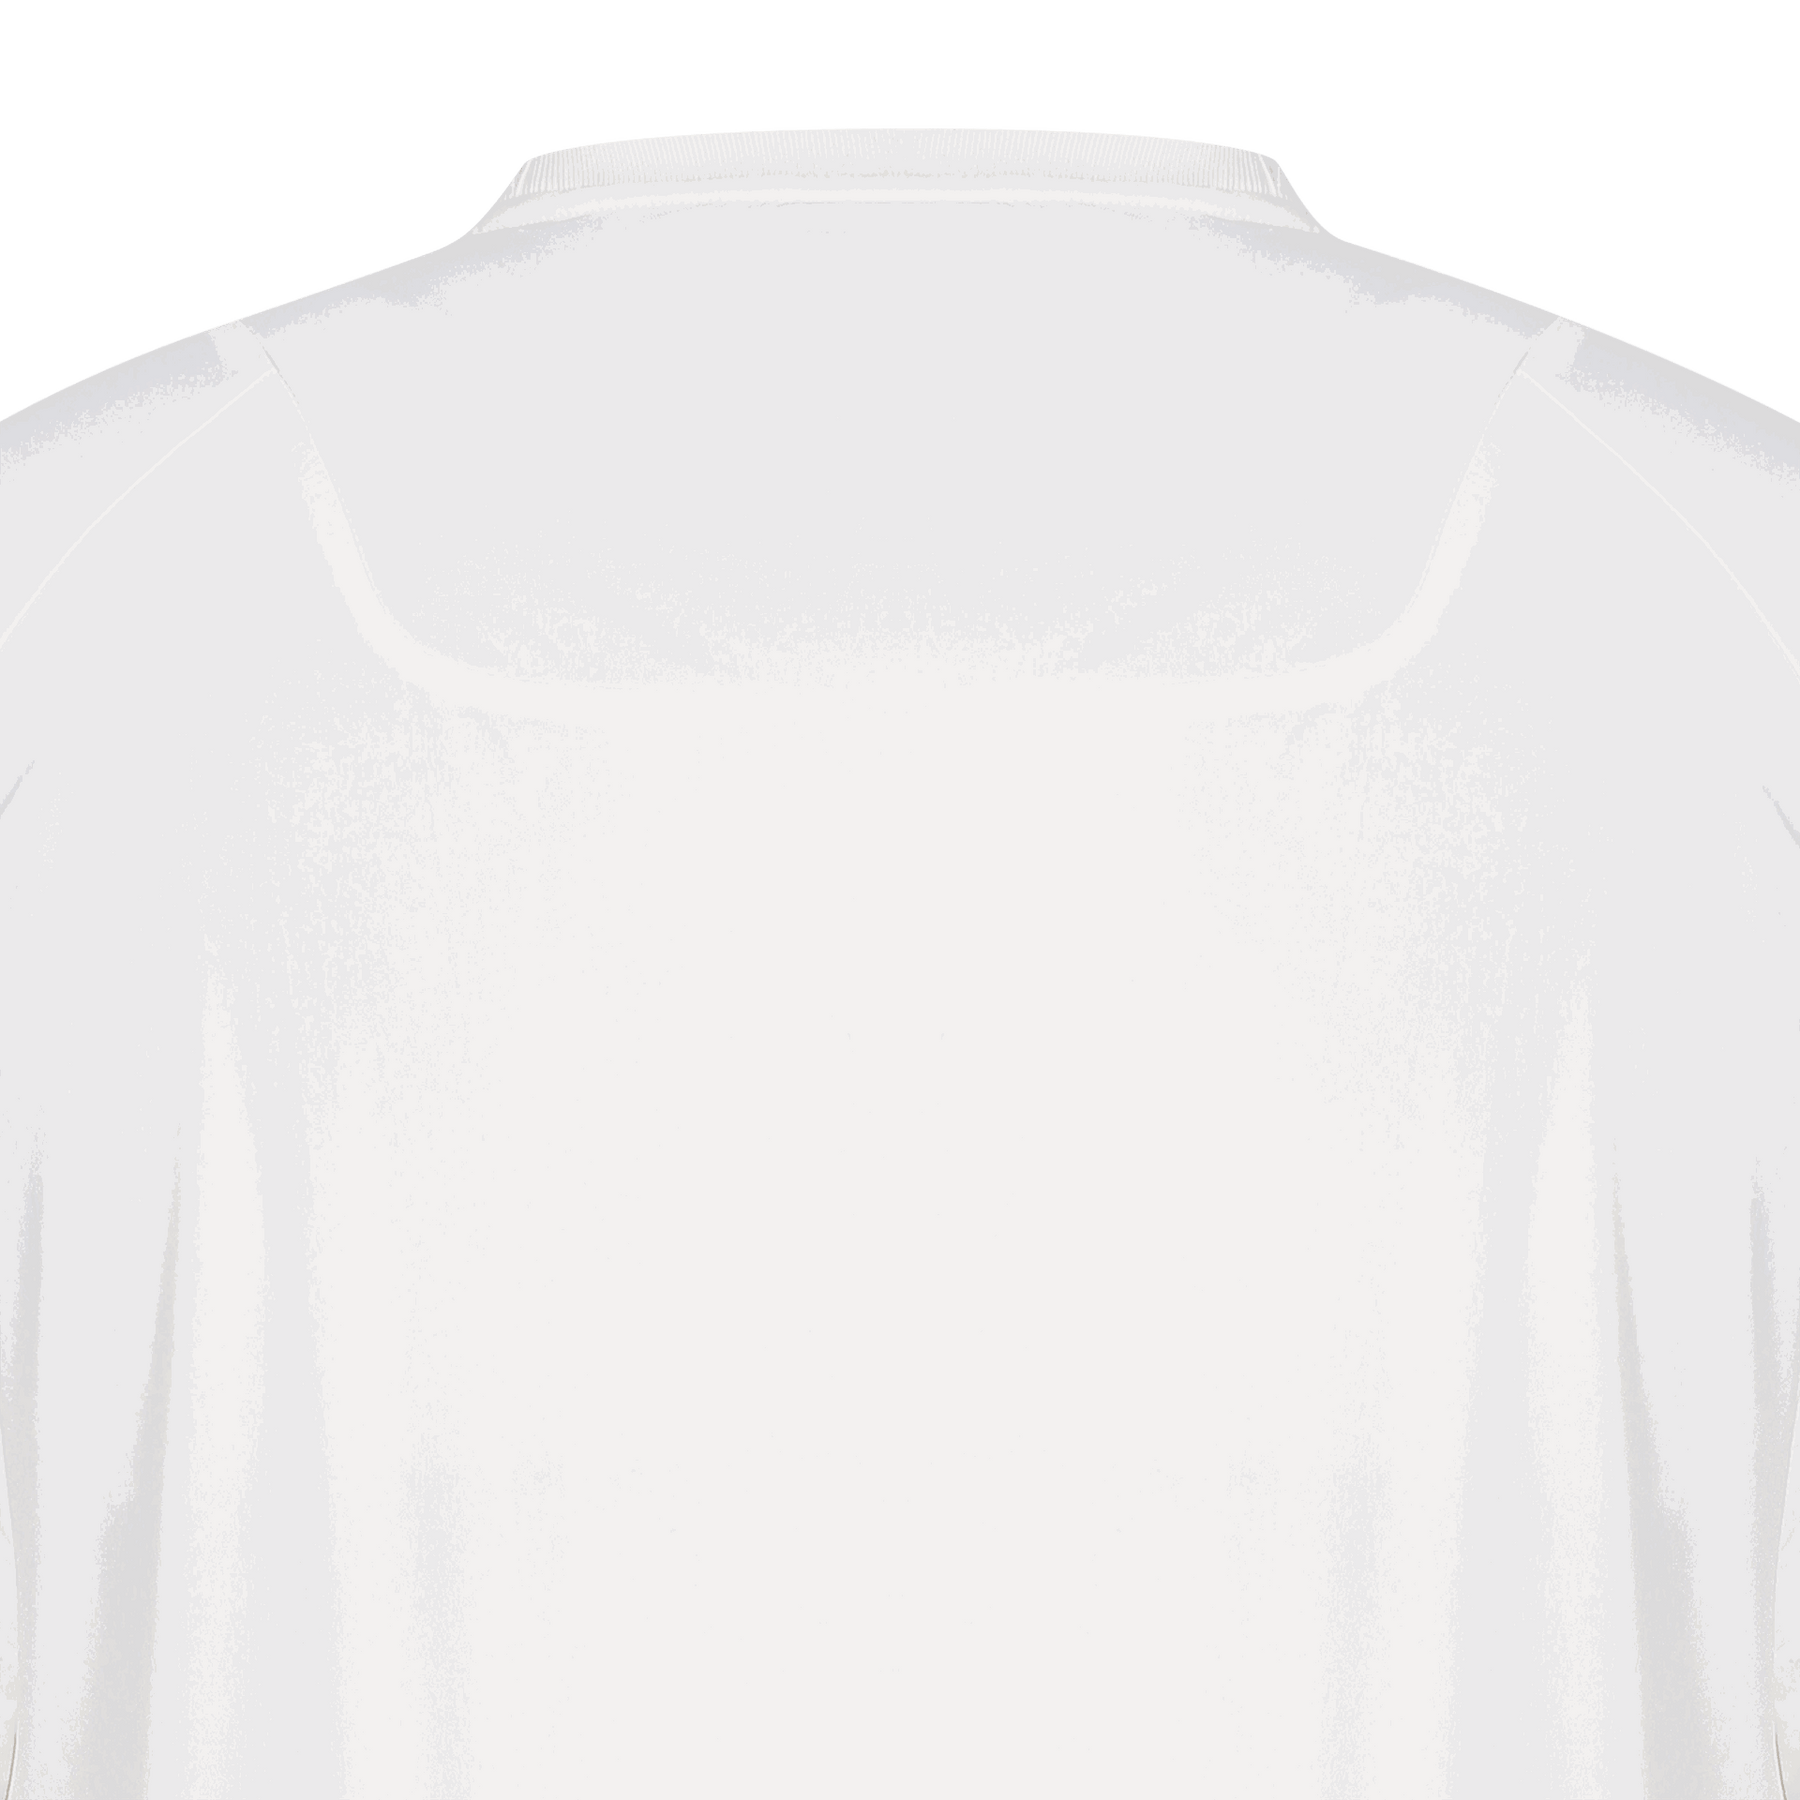 Áo thể thao PROSPECS Nam TM-Clean Round Woven T-Shirt MT-M411